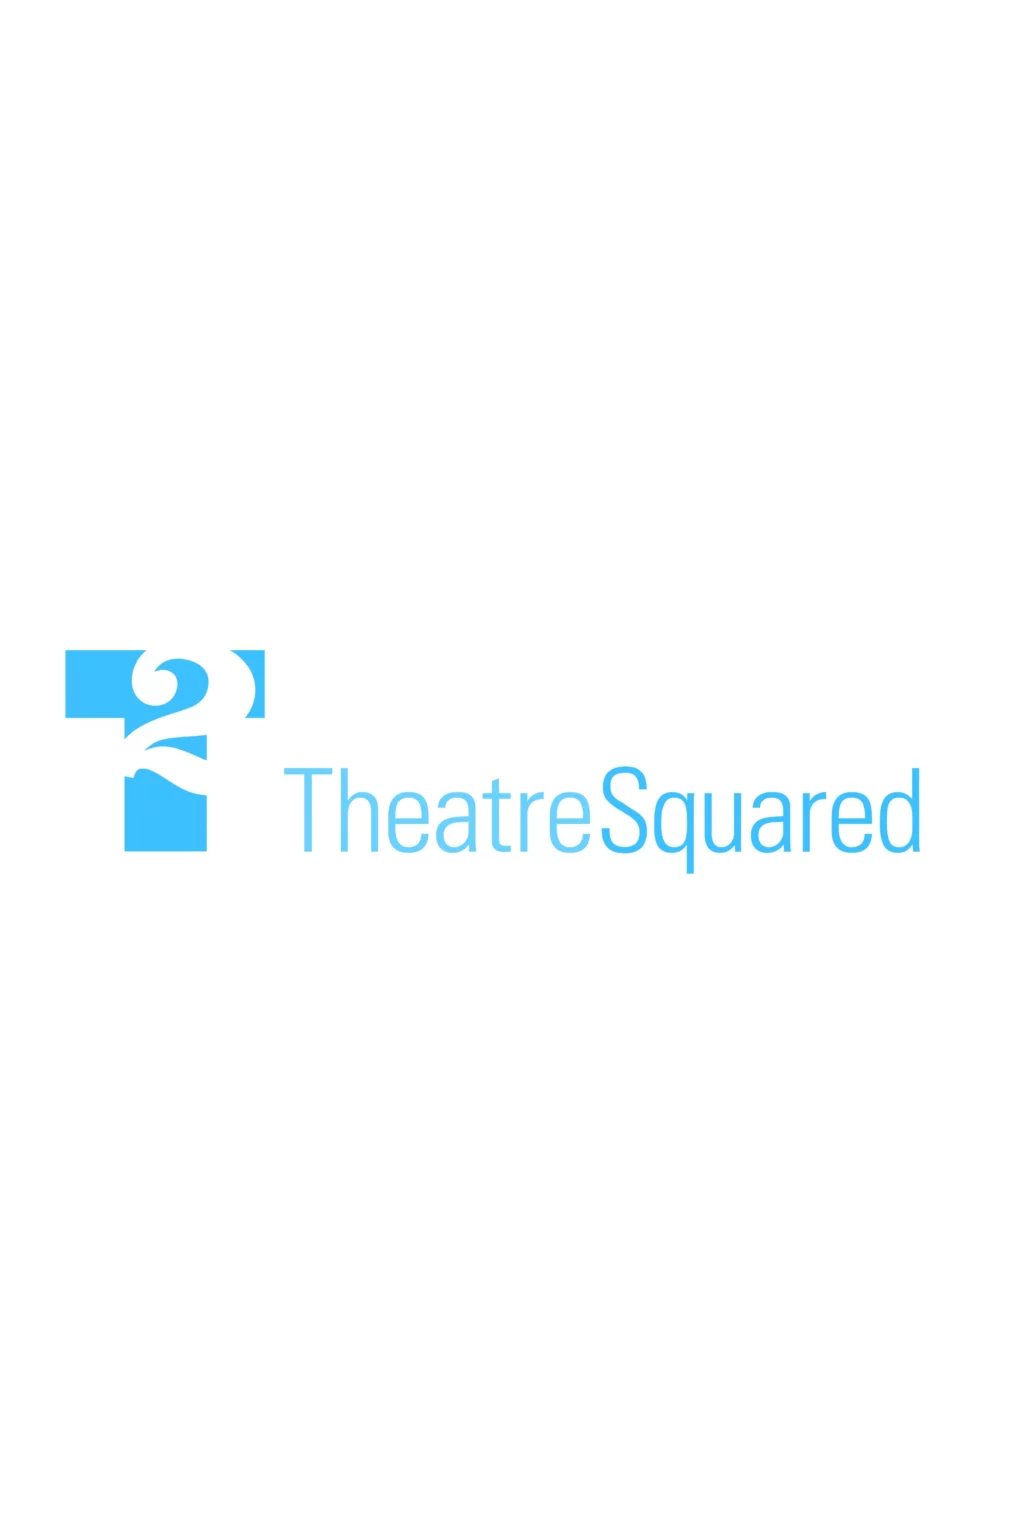 theatre squared